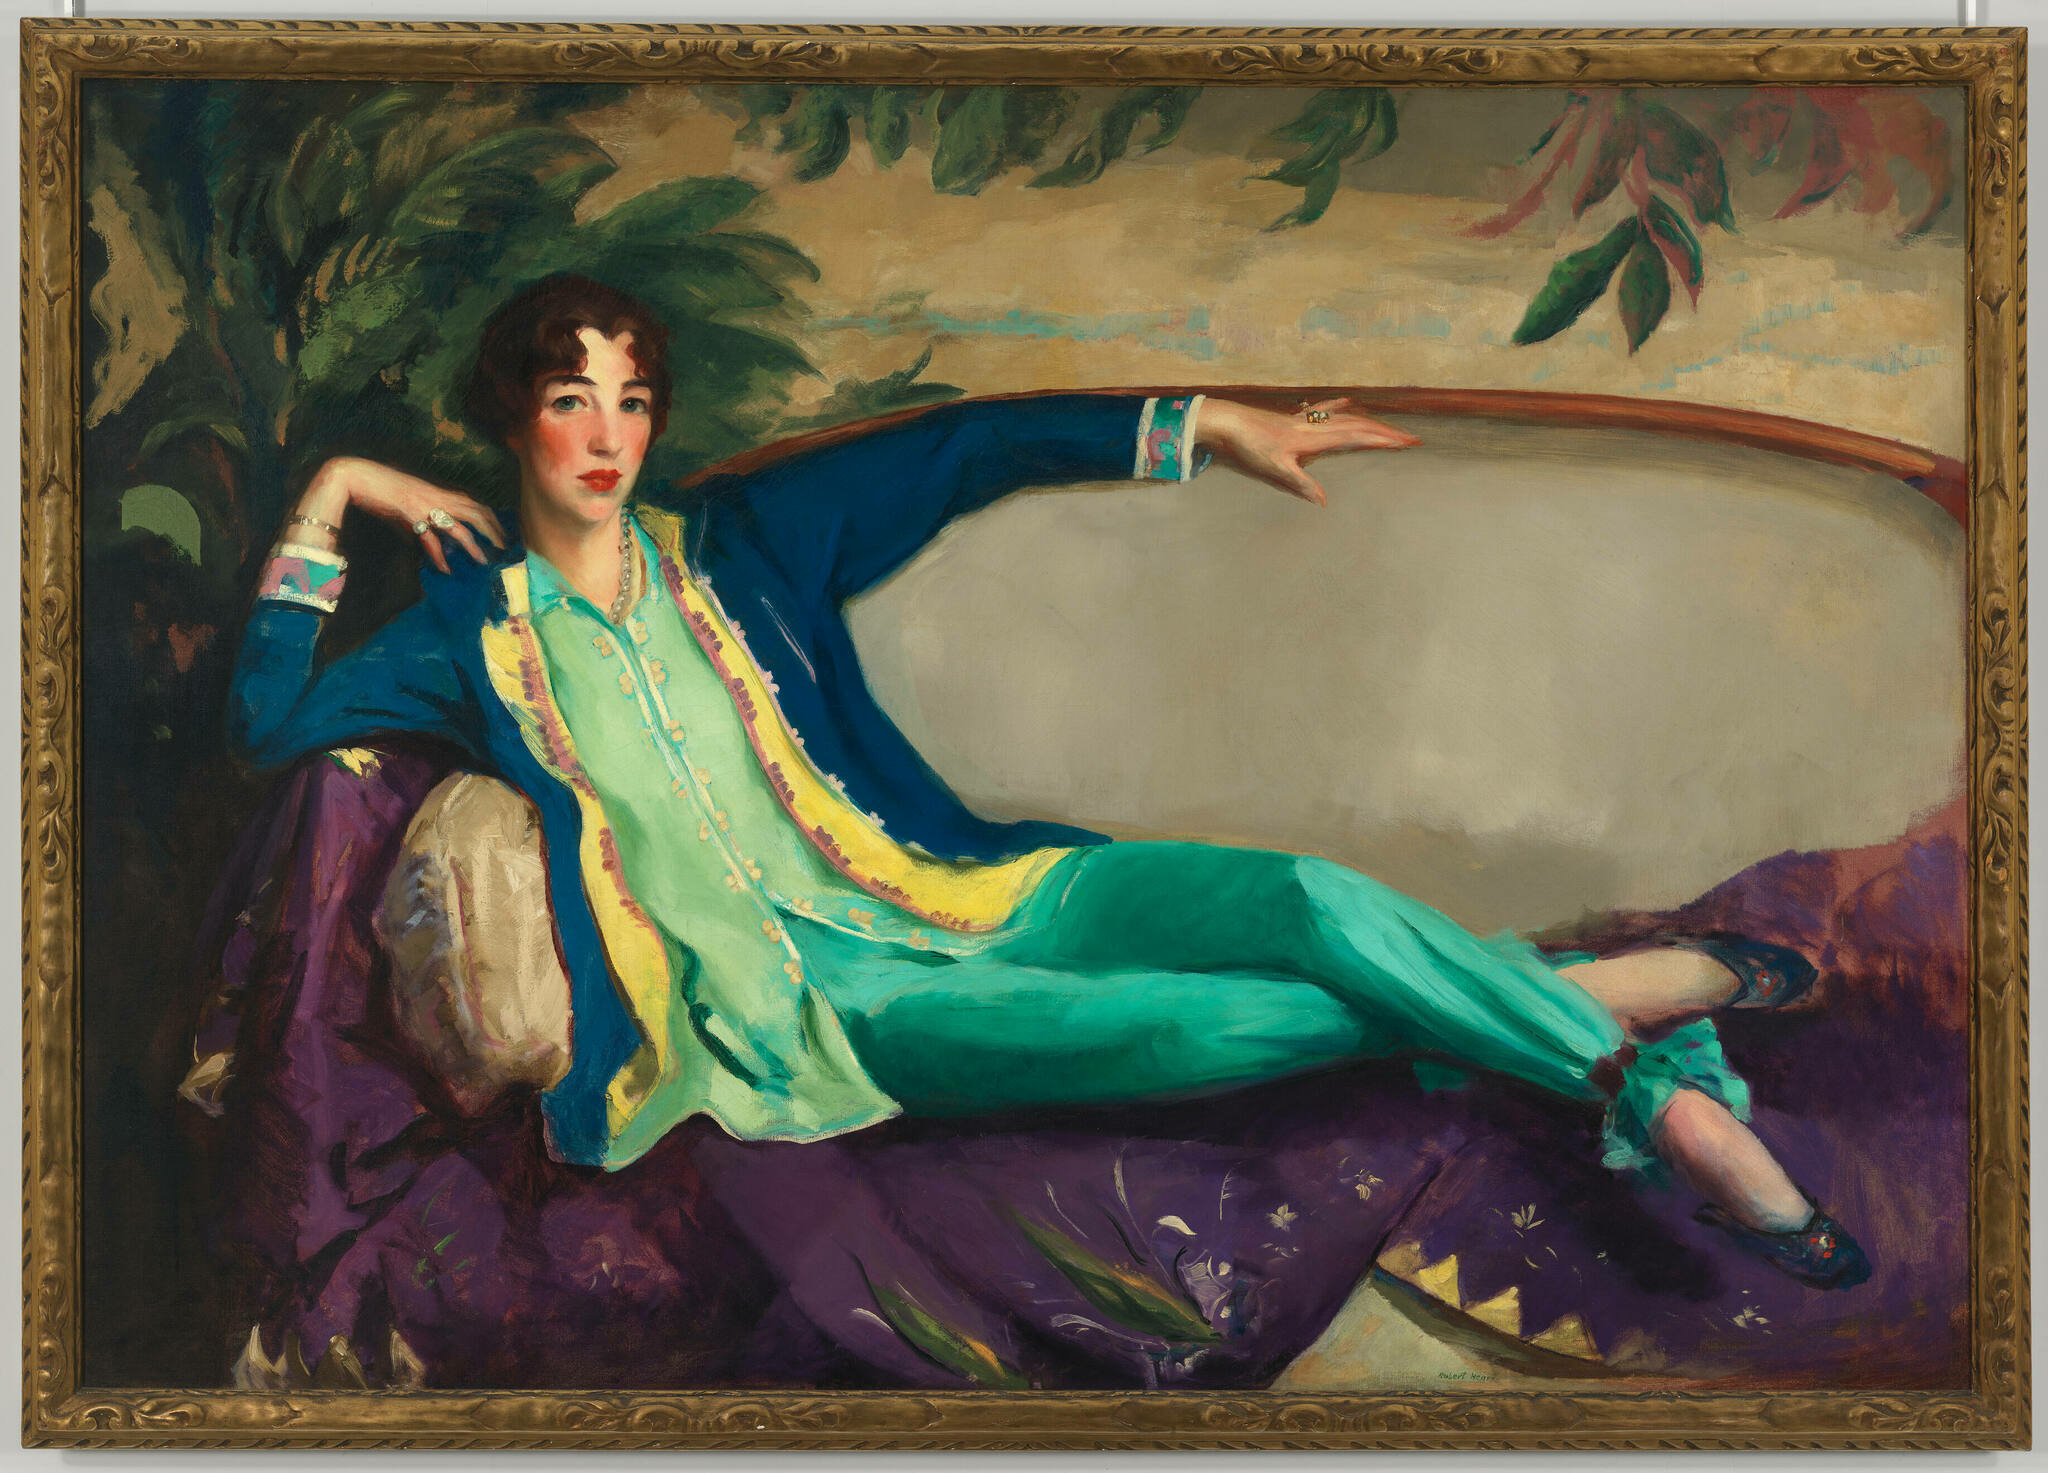 Gertrude Vanderbilt Whitney by Robert Henri - 1916 - 126.8 × 182.9 cm Whitney Museum of American Art